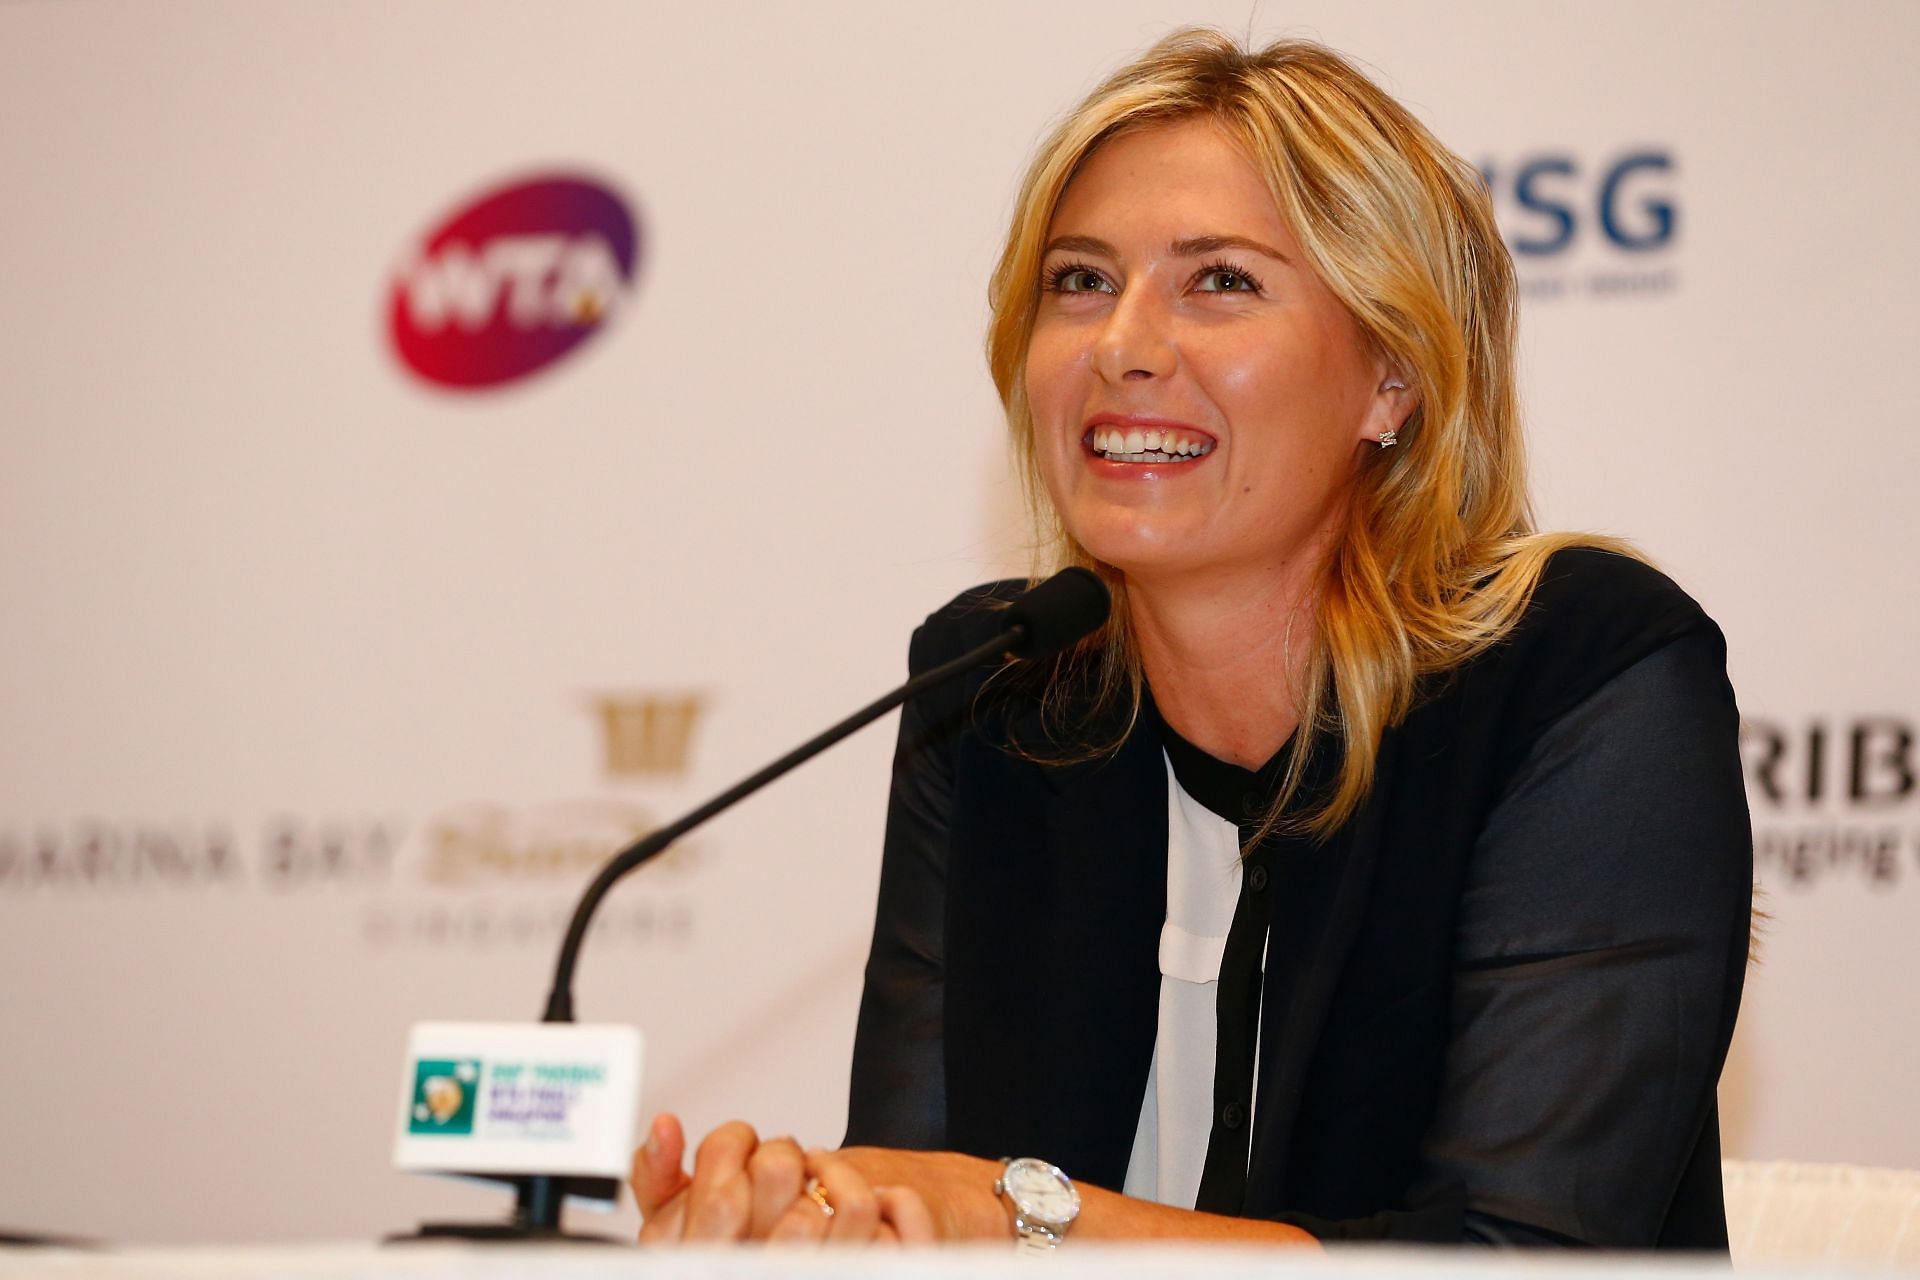 Maria Sharapova retired from professional tennis in 2020.